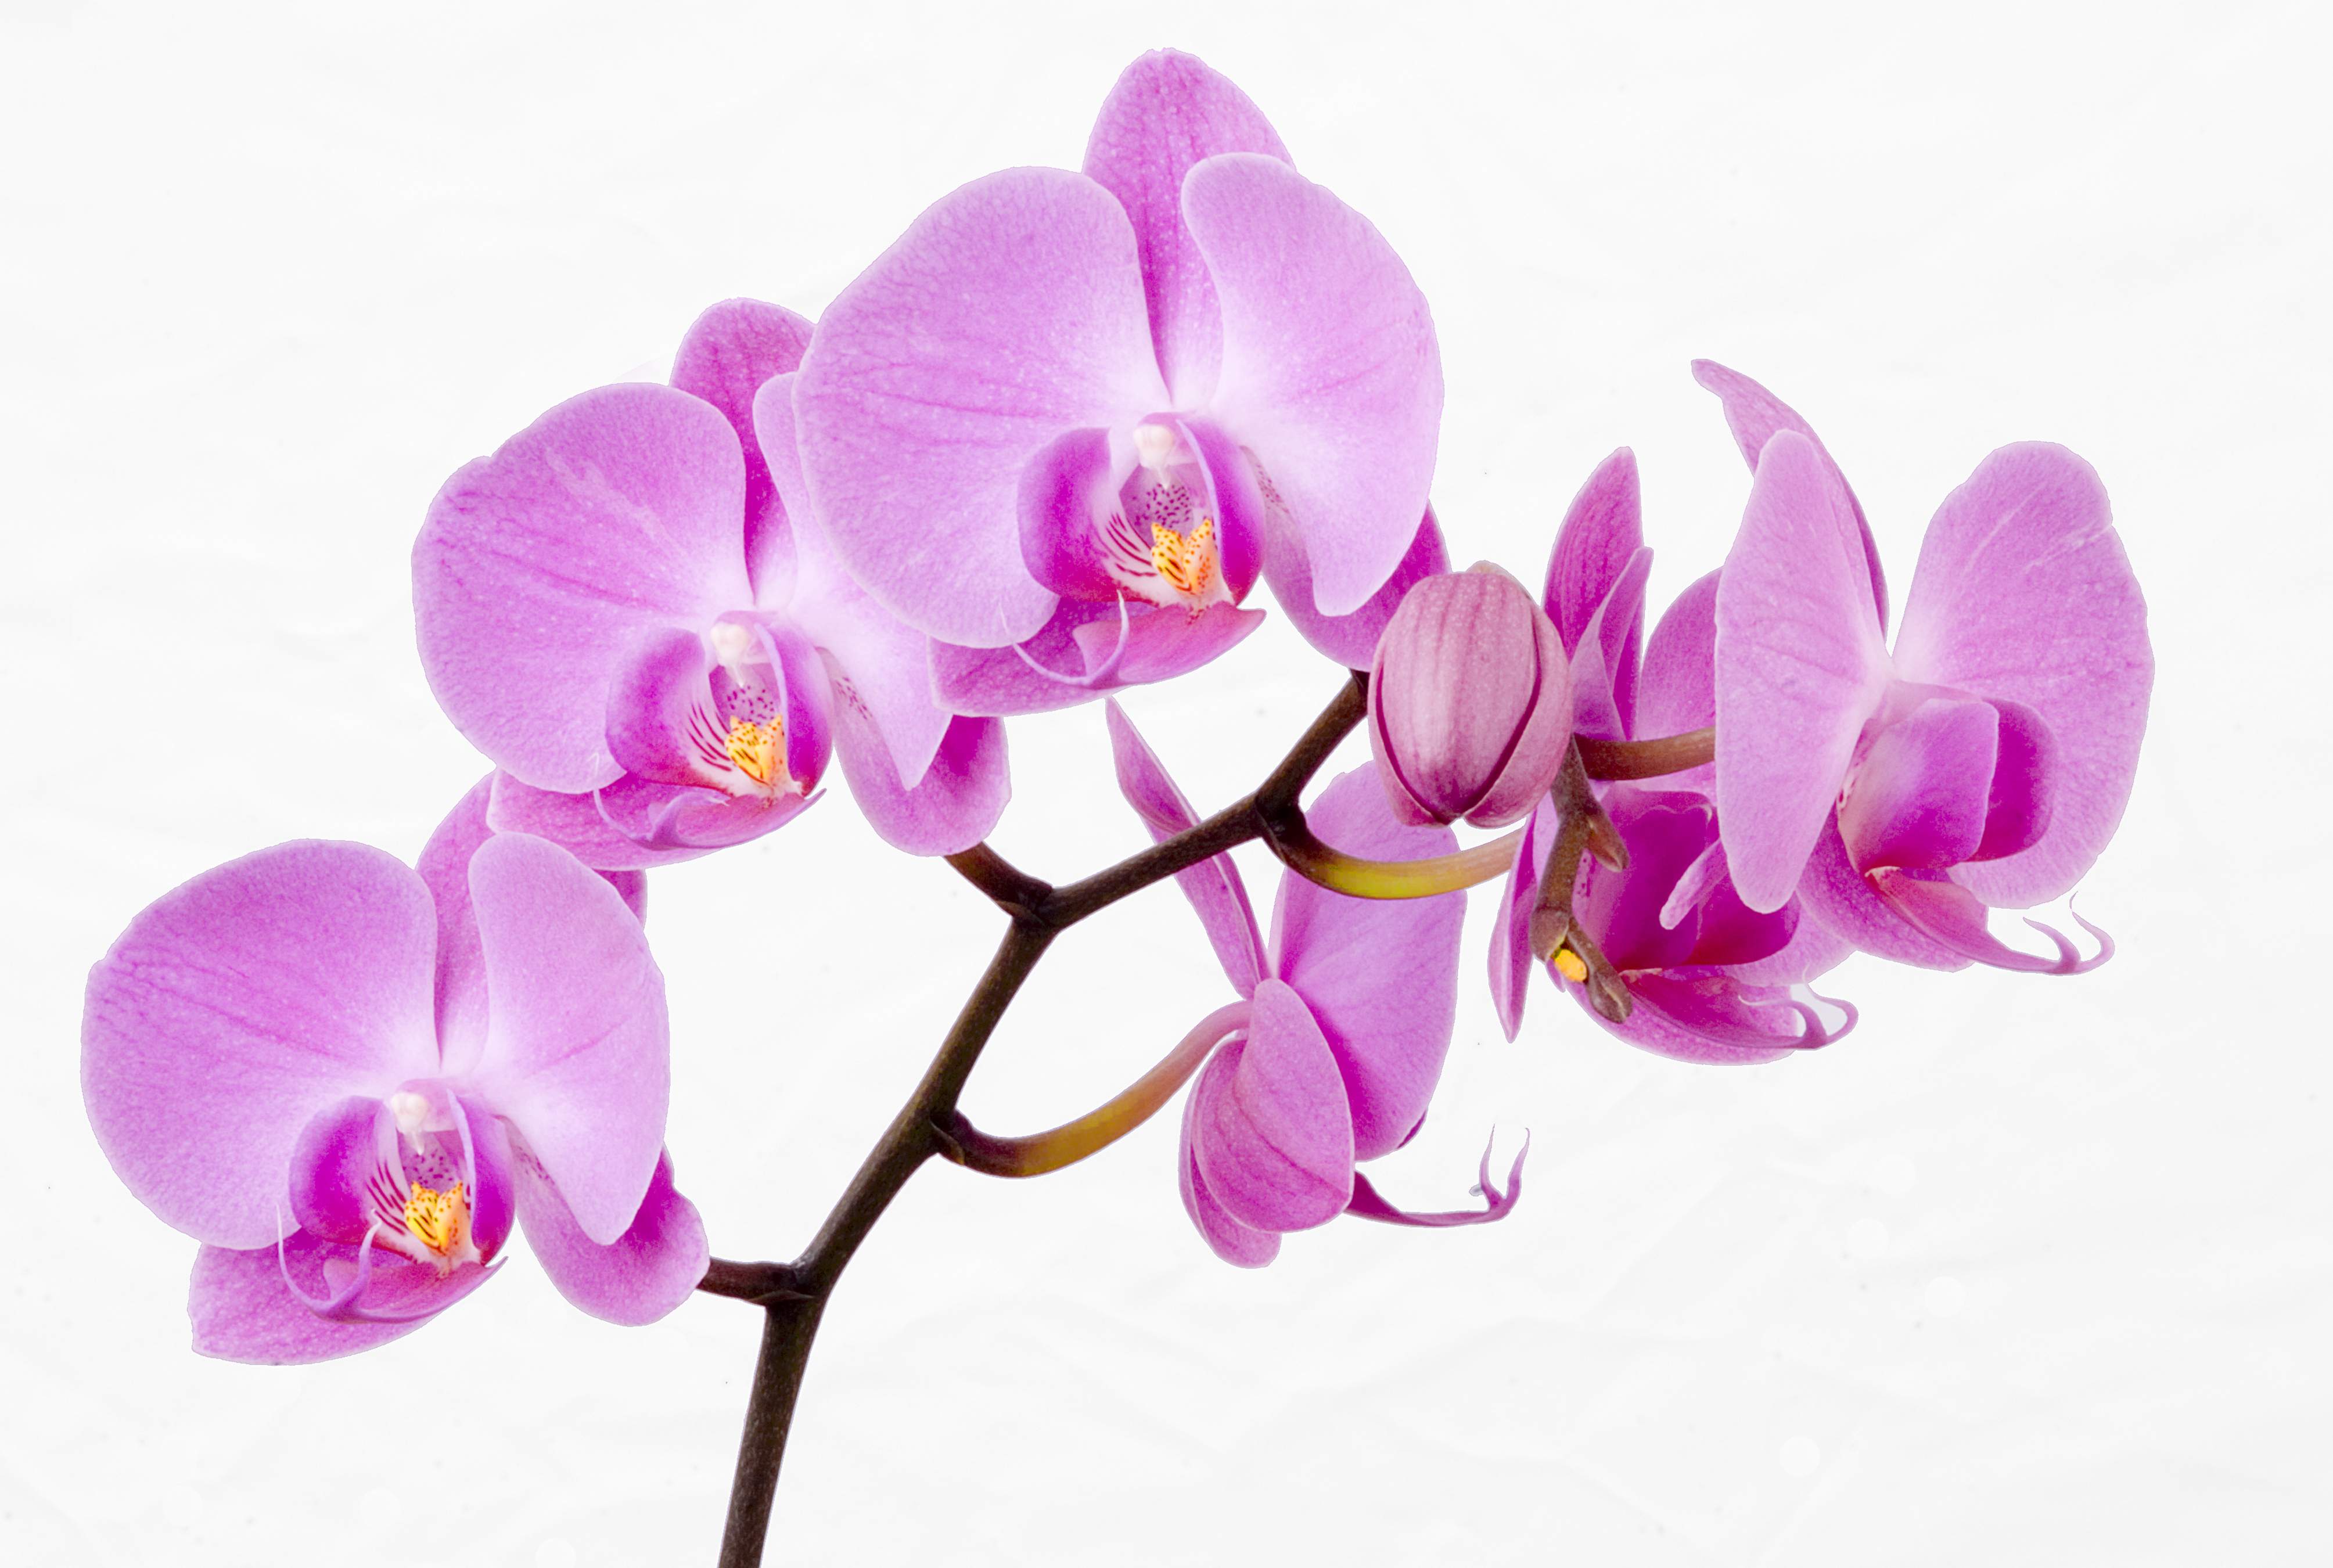 Orchid Flowers Pics. Beautiful image HD Picture & Desktop Wallpaper